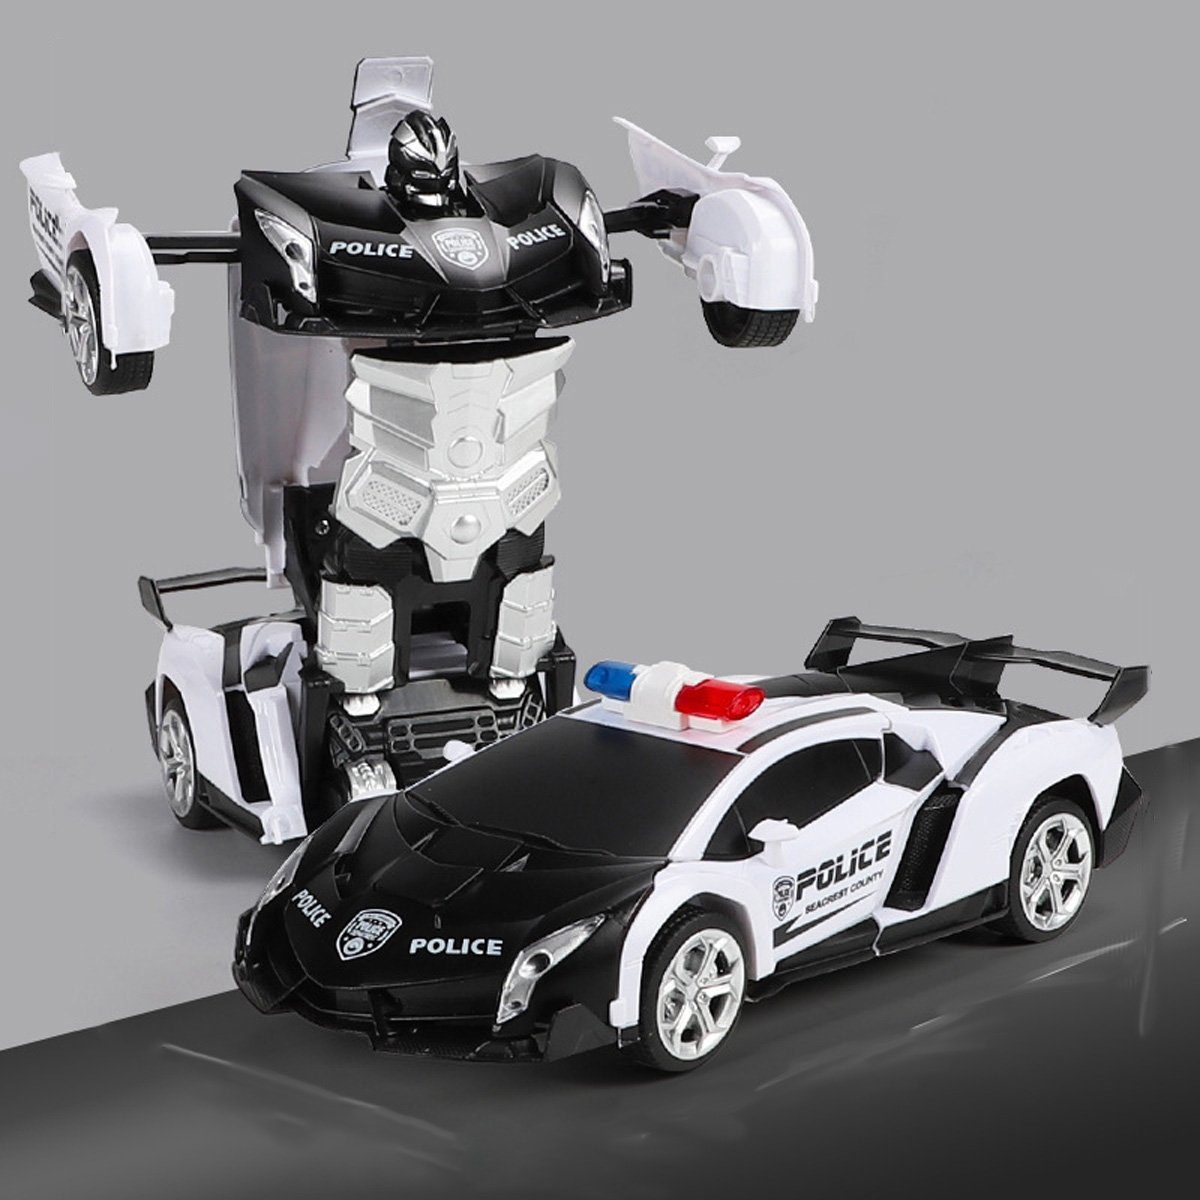 yozhiqu RC-Roboter Ferngesteuertes Auto-Roboter, Auto-Spielzeug, 360-Grad-Drehung, Ein-Klick-Verformung, Kinder-Roboter-Auto-Bausatz-Spielzeug